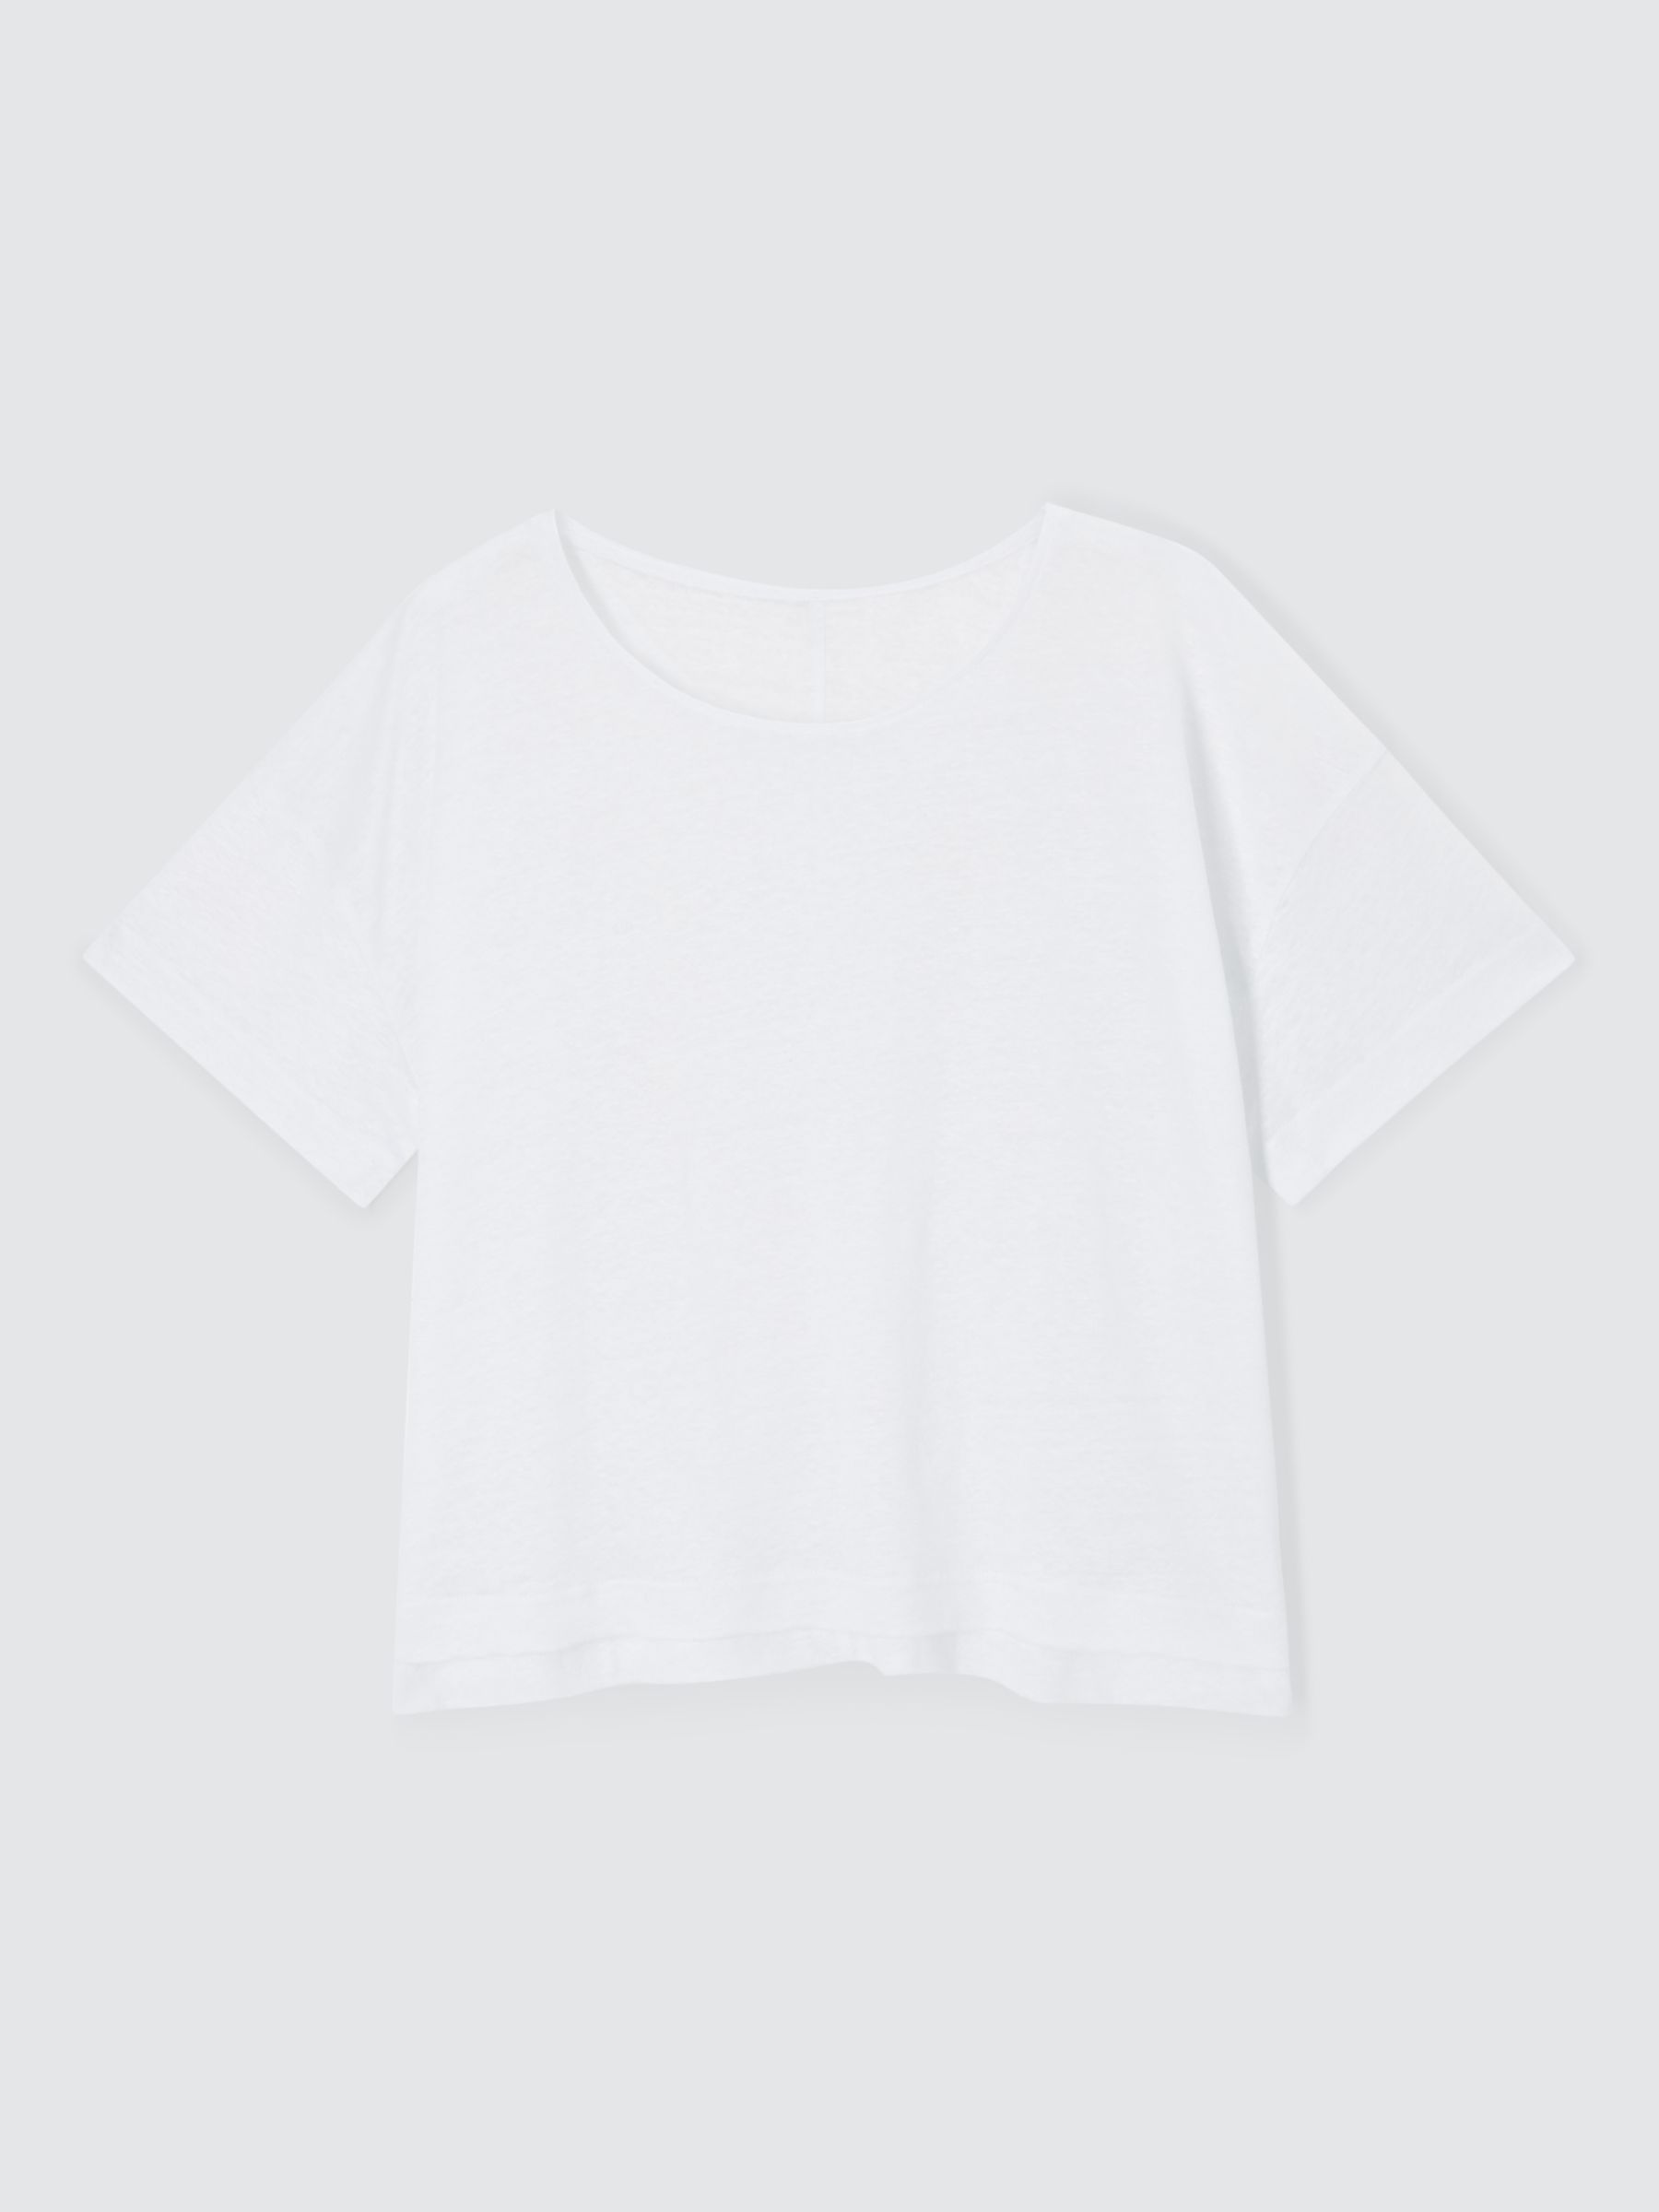 John Lewis Relaxed Linen Crew Neck T-Shirt, White, 8